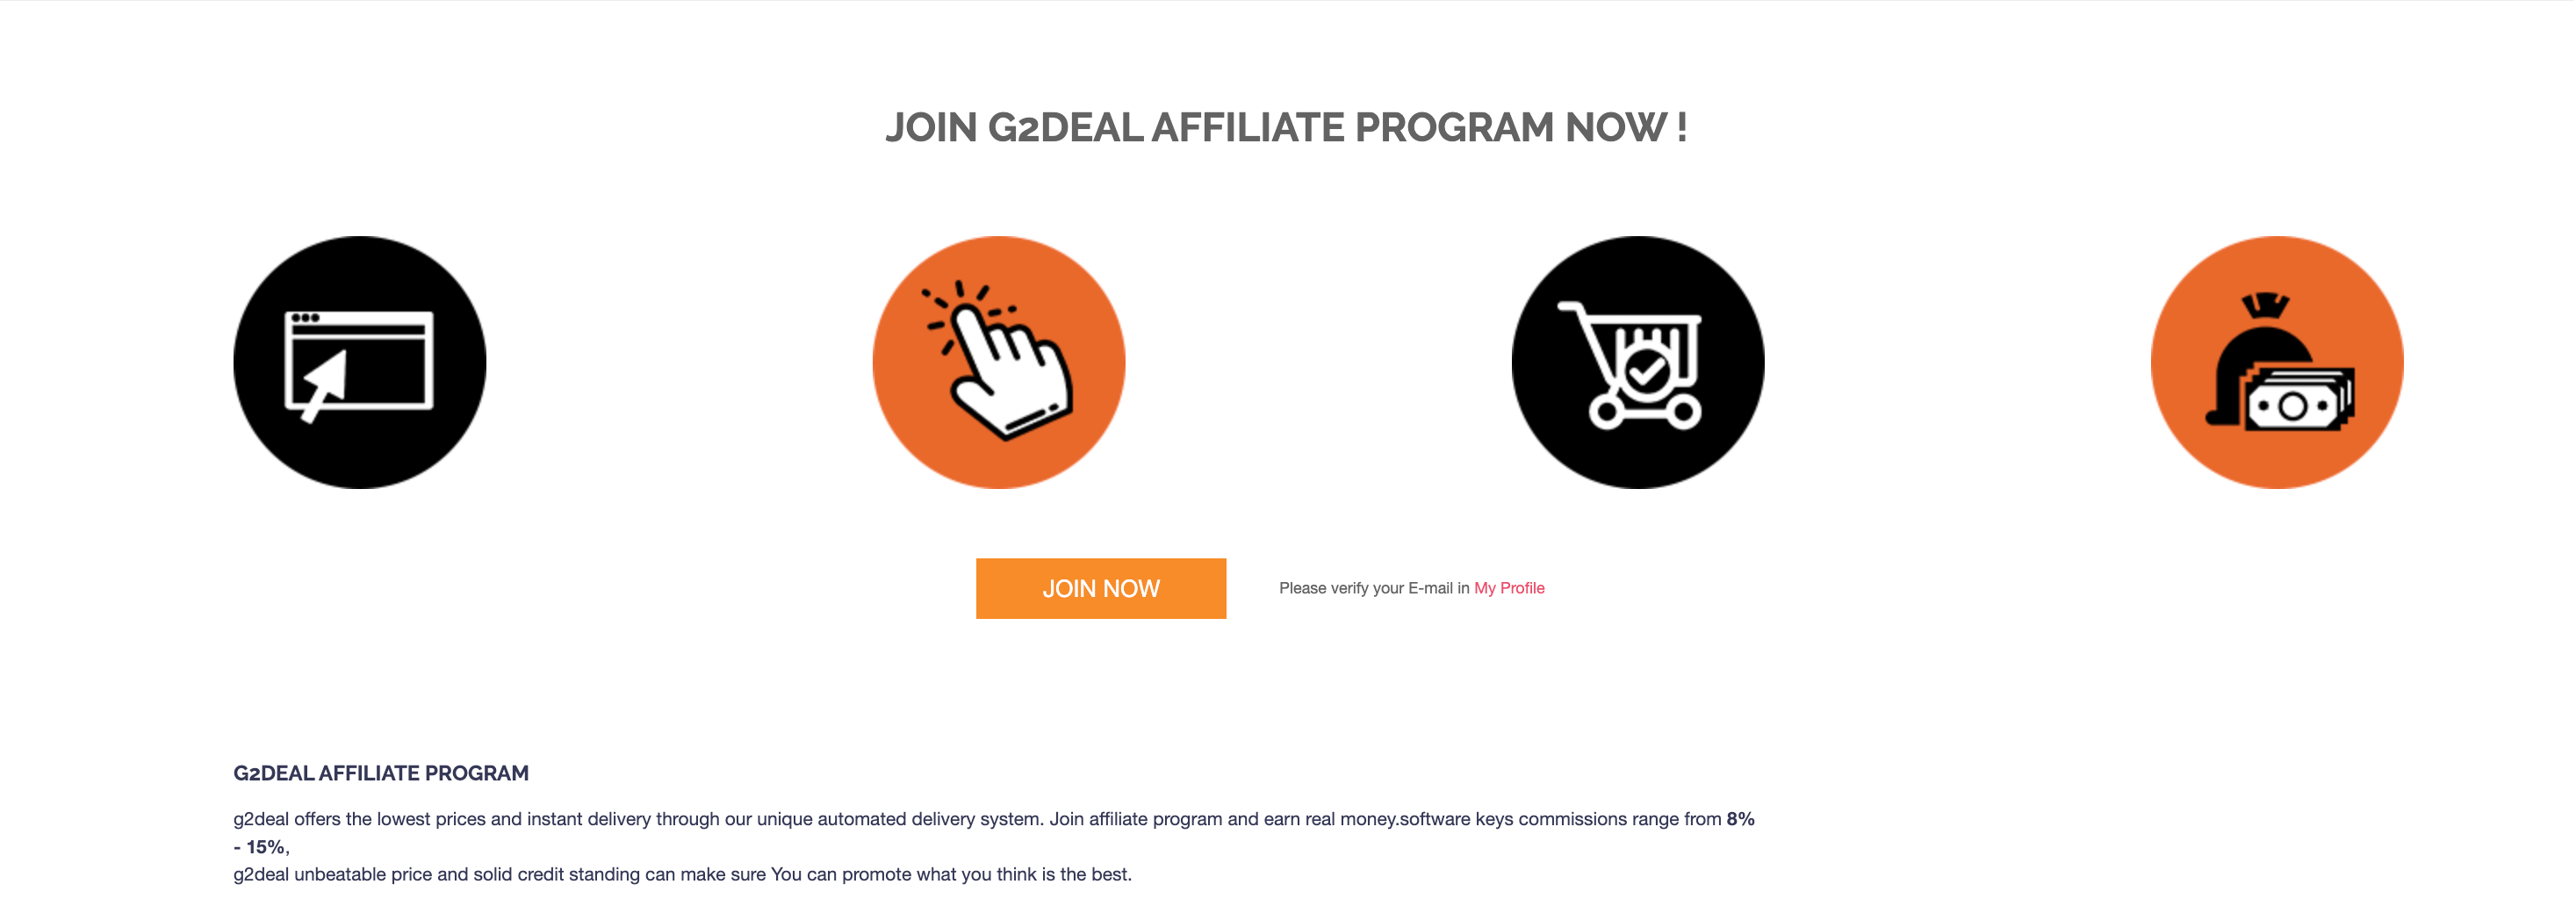 G2Deal Affiliate Program's homepage